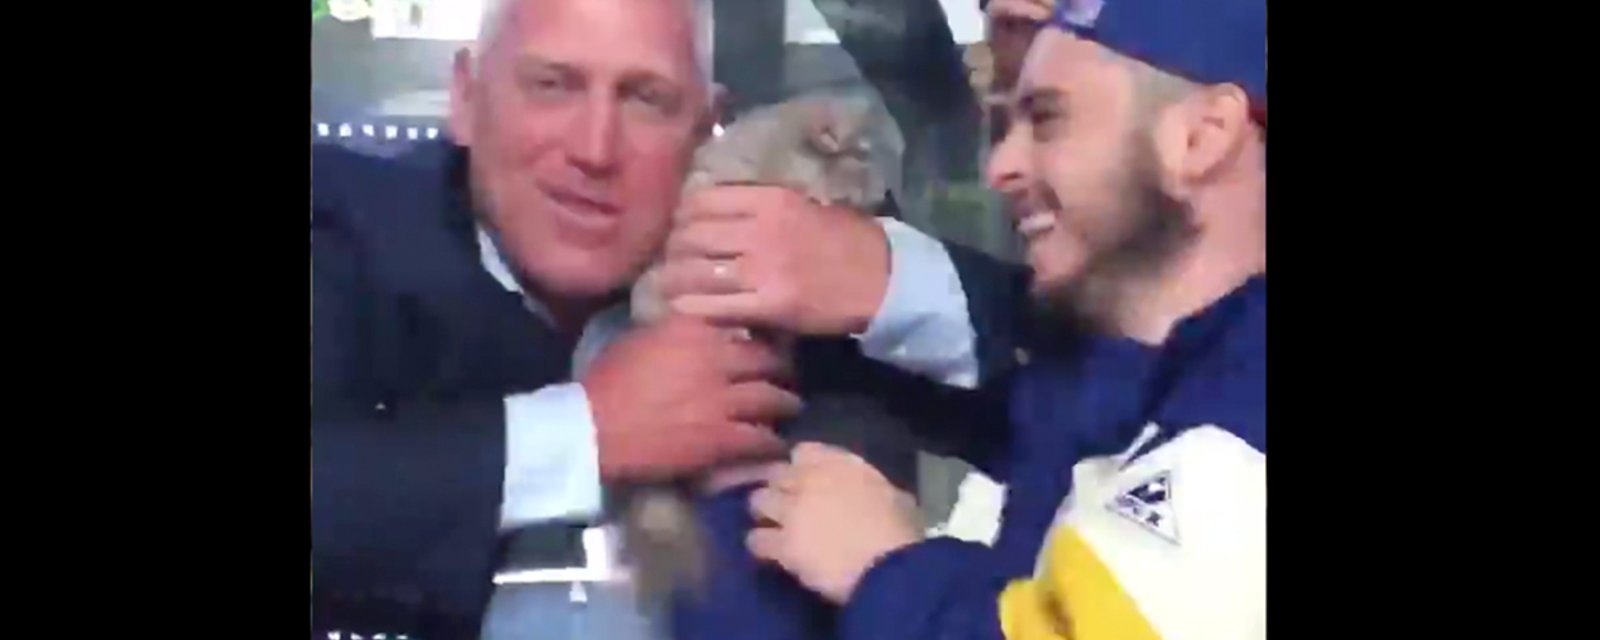 A drunken Brett Hull celebrates the Blues’ win by kissing a chinchilla